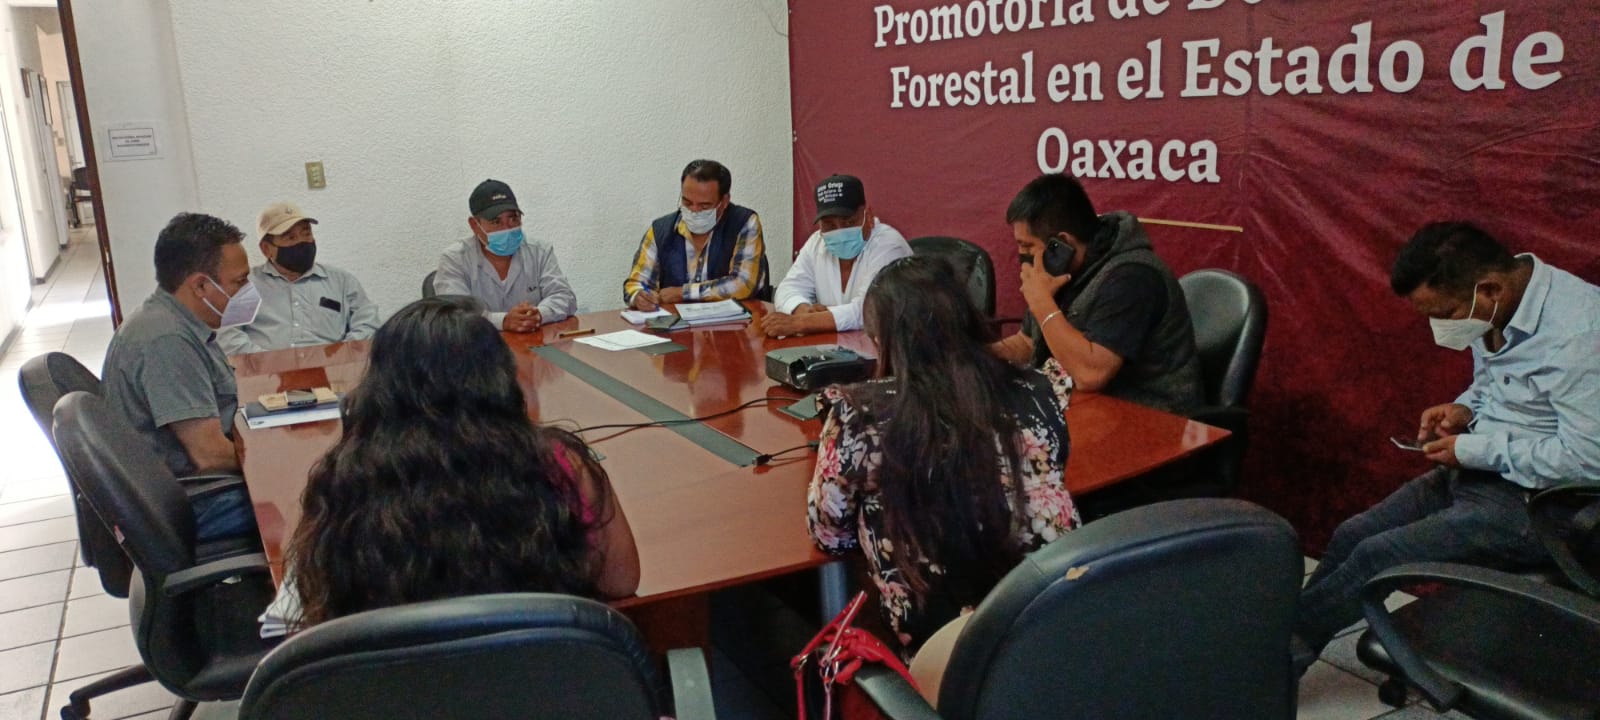 /cms/uploads/image/file/686861/Reuni_n_PDF_Oaxaca_23112021.jpeg